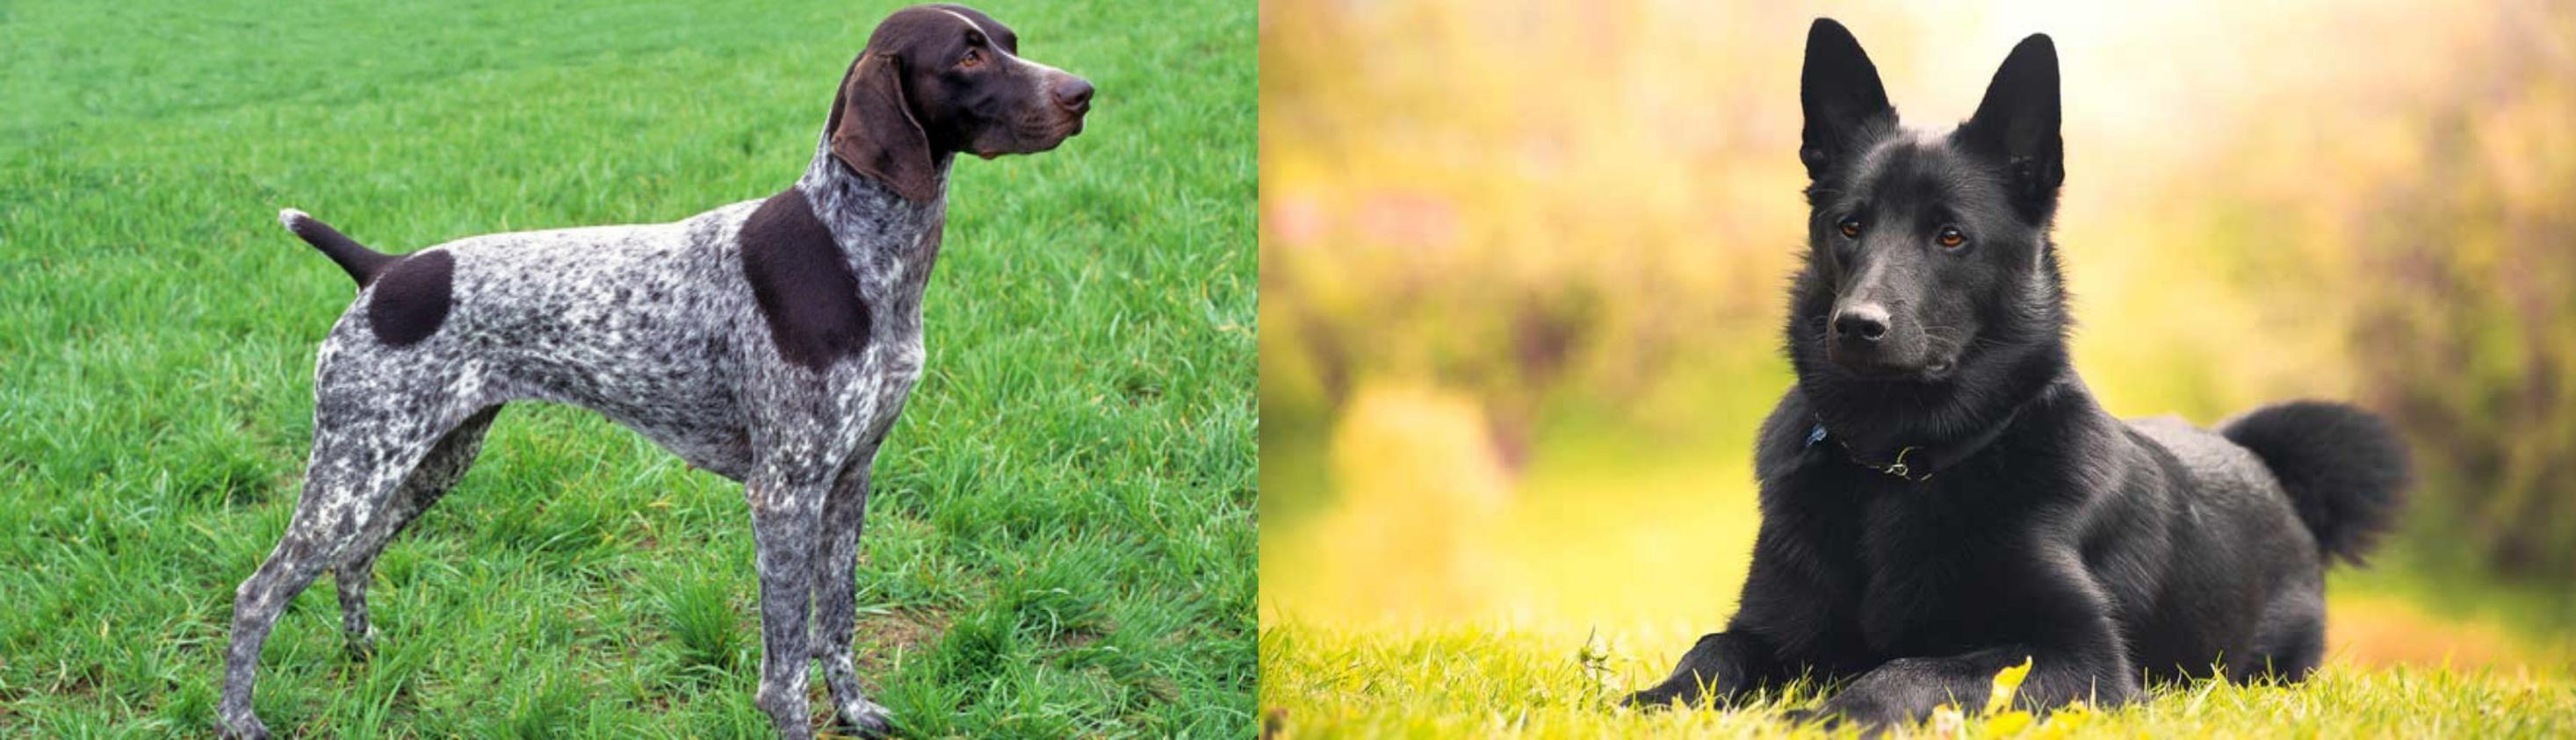 German Shorthaired Pointer Vs Black Norwegian Elkhound Breed Comparison